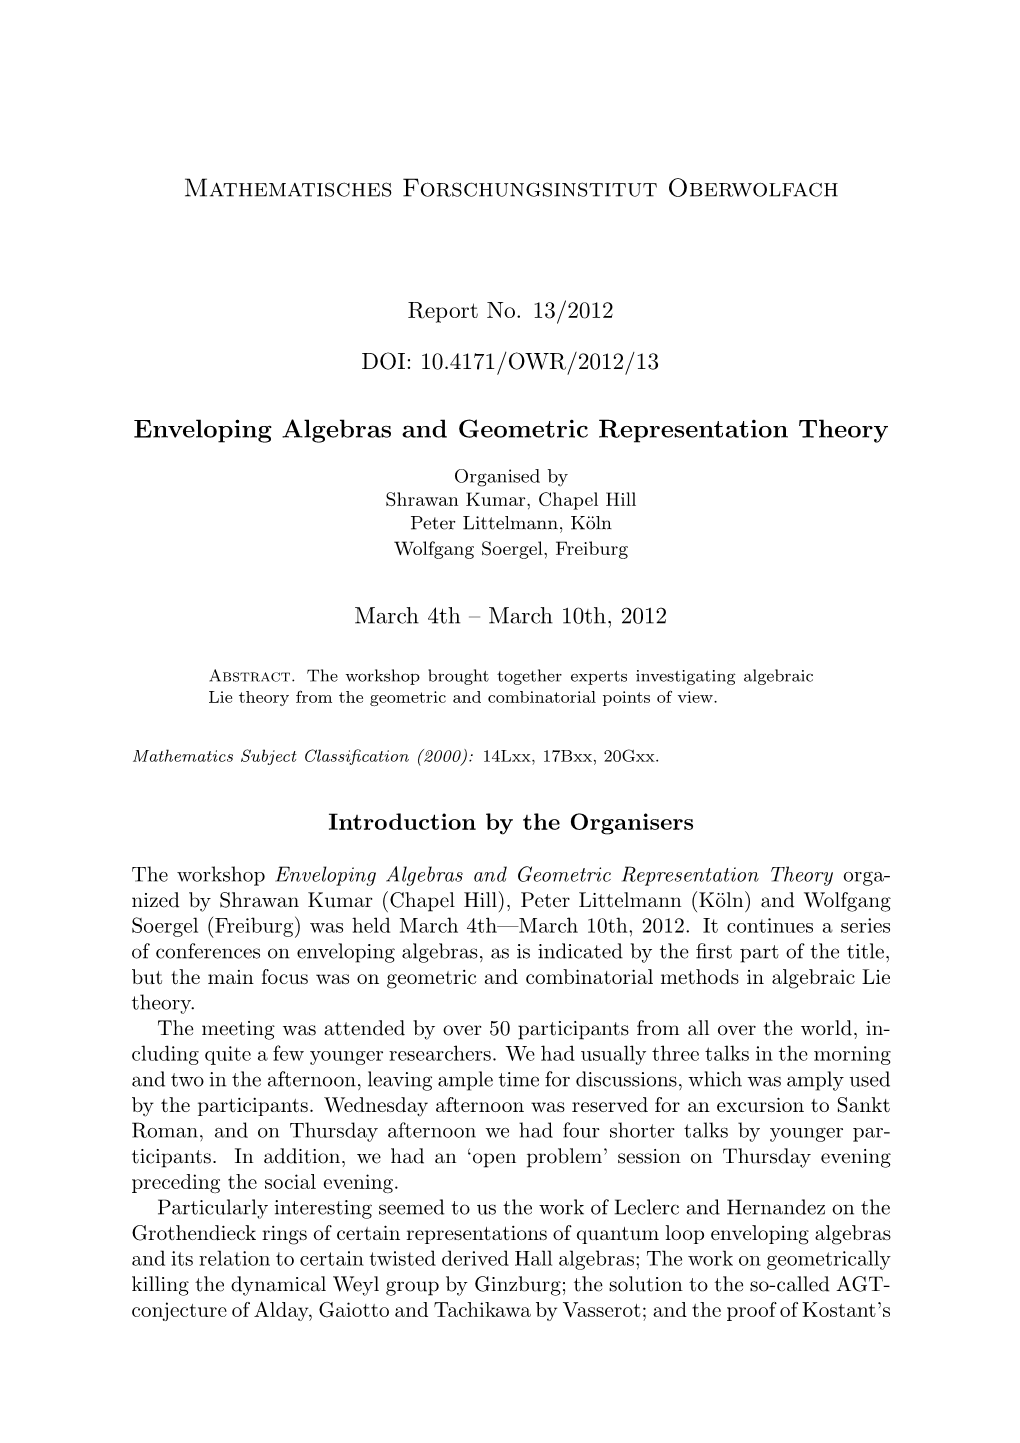 Enveloping Algebras and Geometric Representation Theory